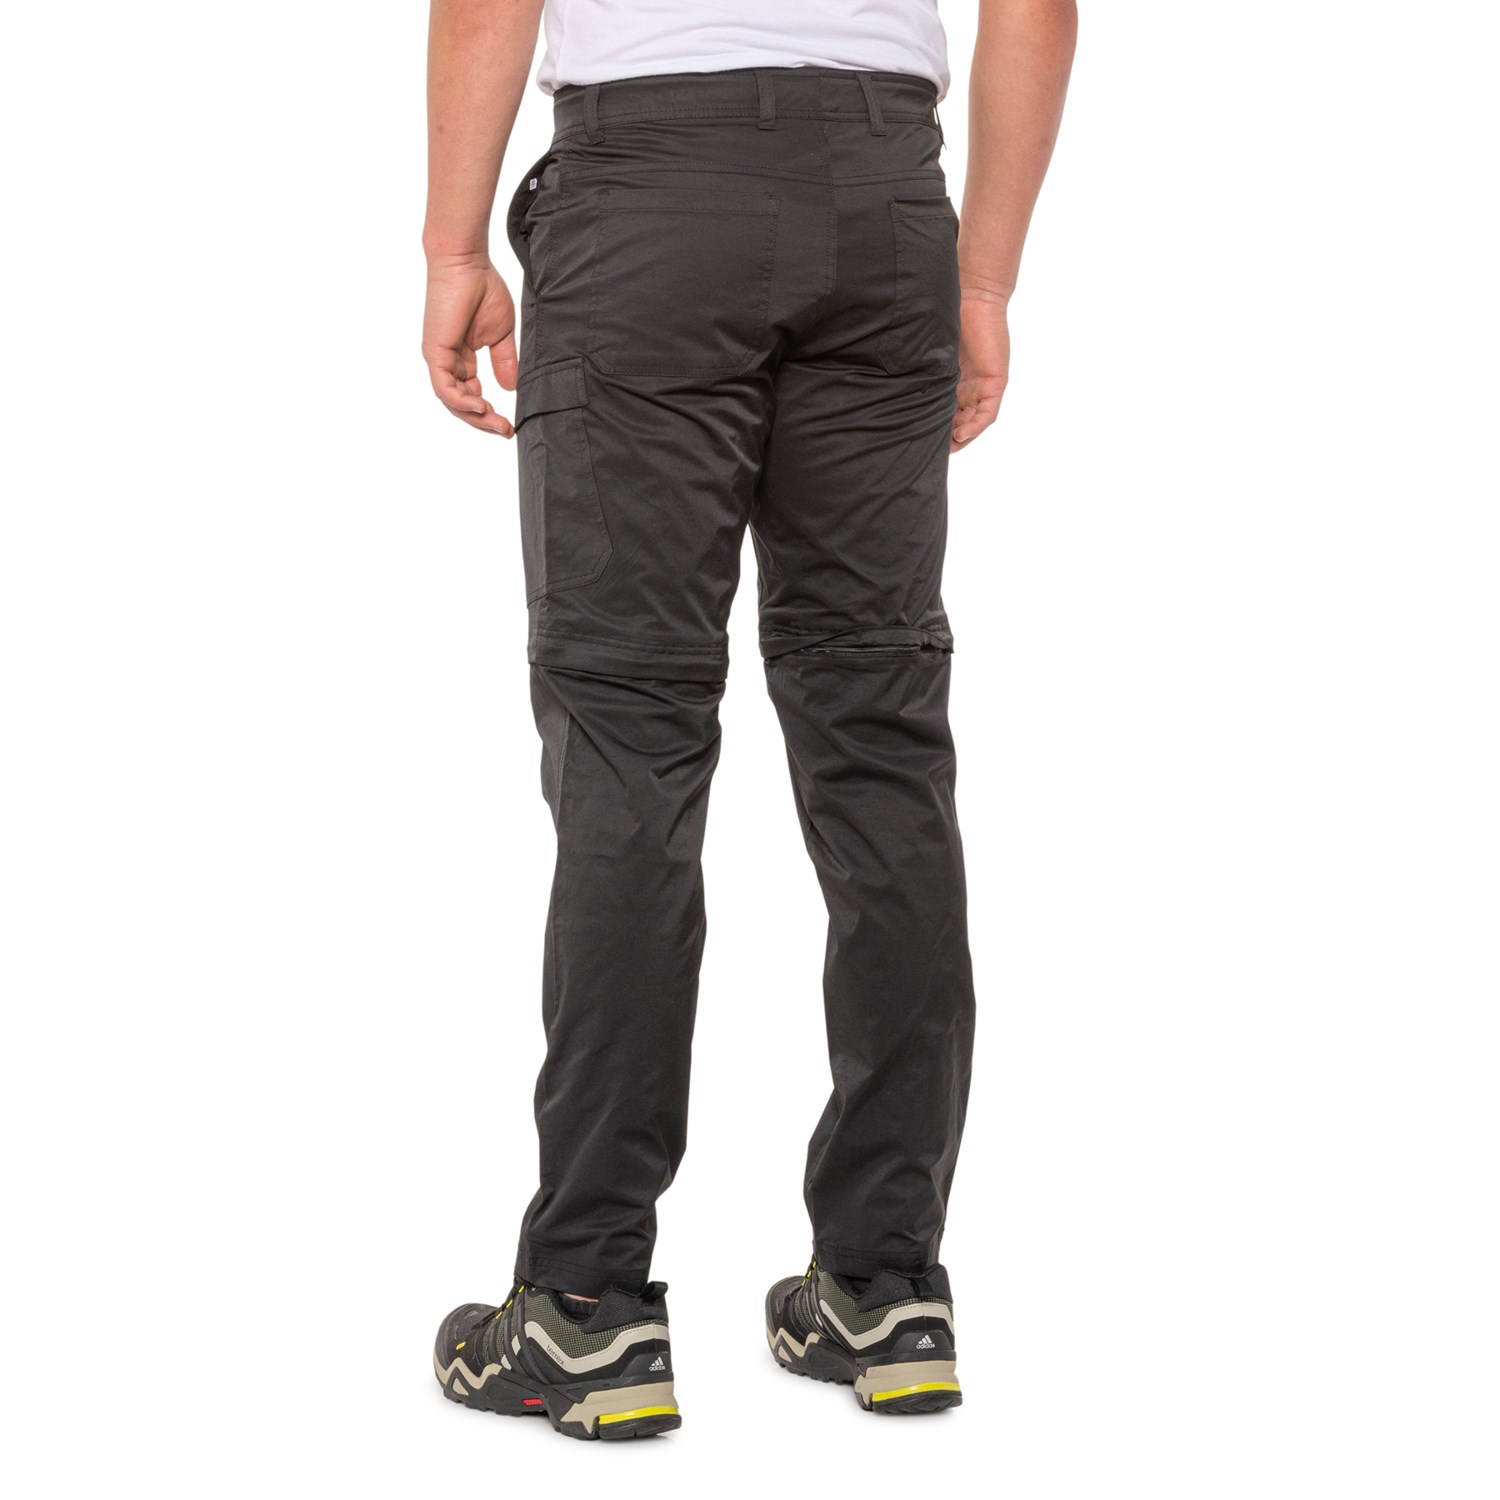 ZeroXposur Range Convertible Pants (For Men) - Save 56%